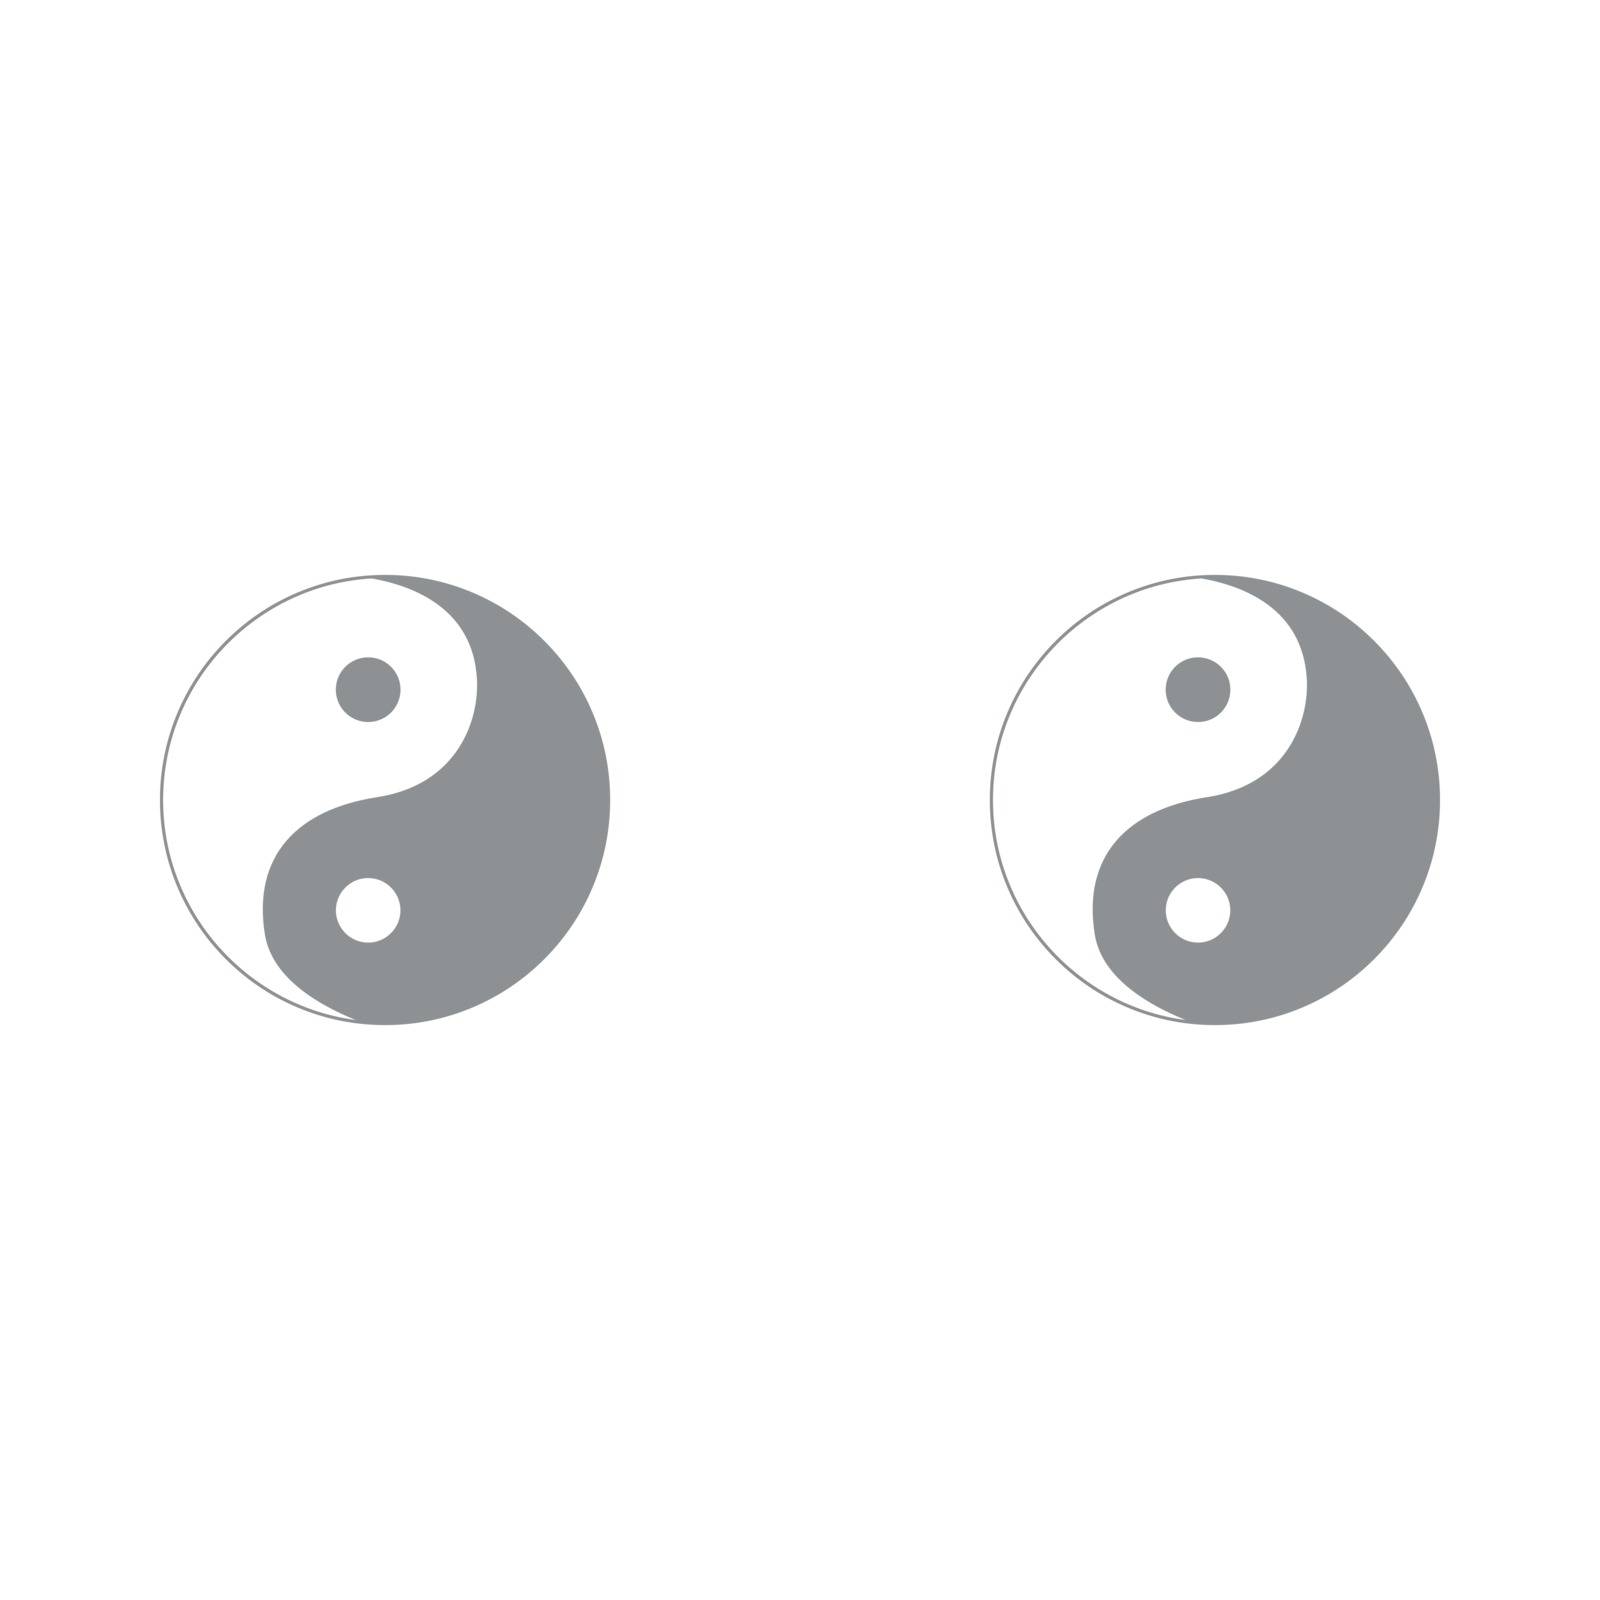 Yin Yang symbol it is icon . by serhii435